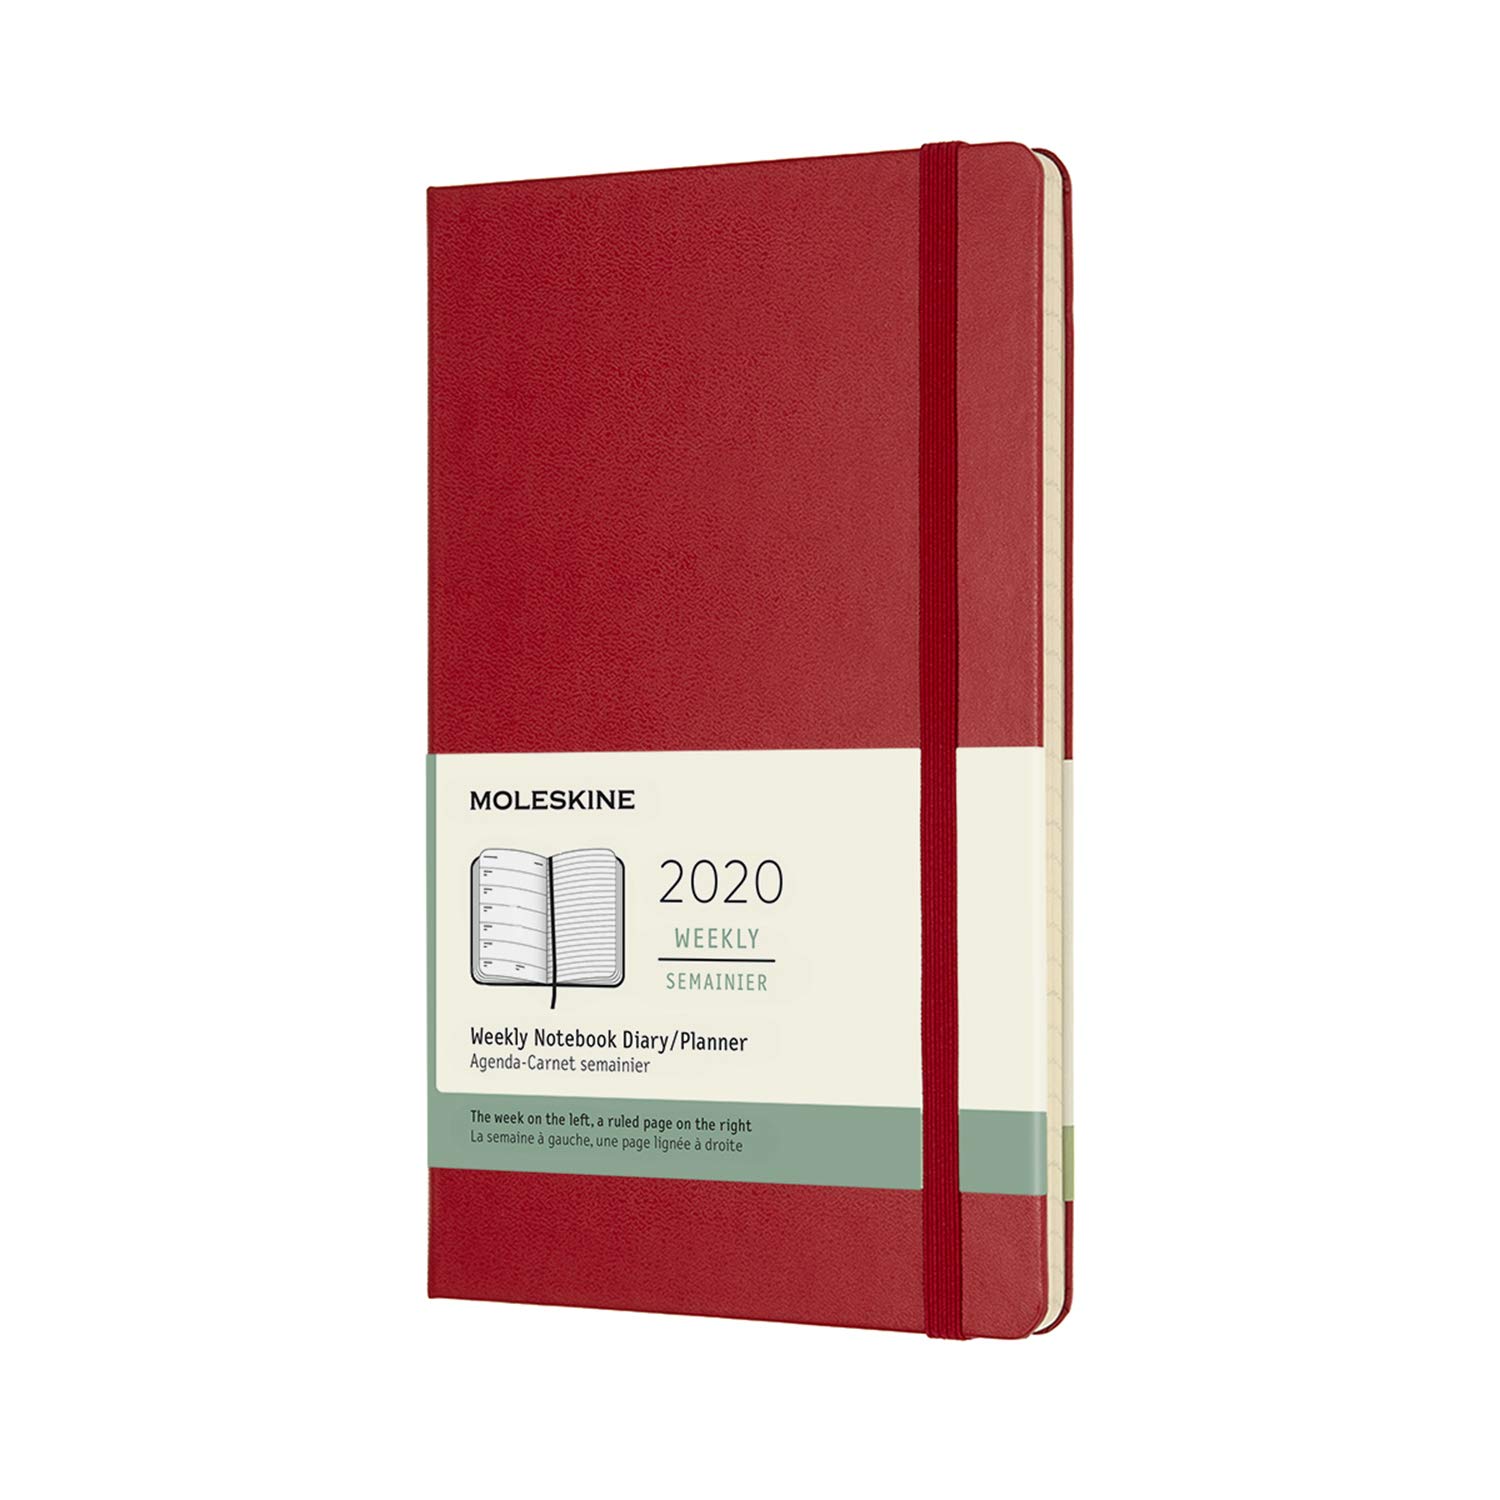 Agenda 2020 - Moleskine 12-Month Weekly Notebook Planner - Scarlet Red, Large, Hard cover | Moleskine